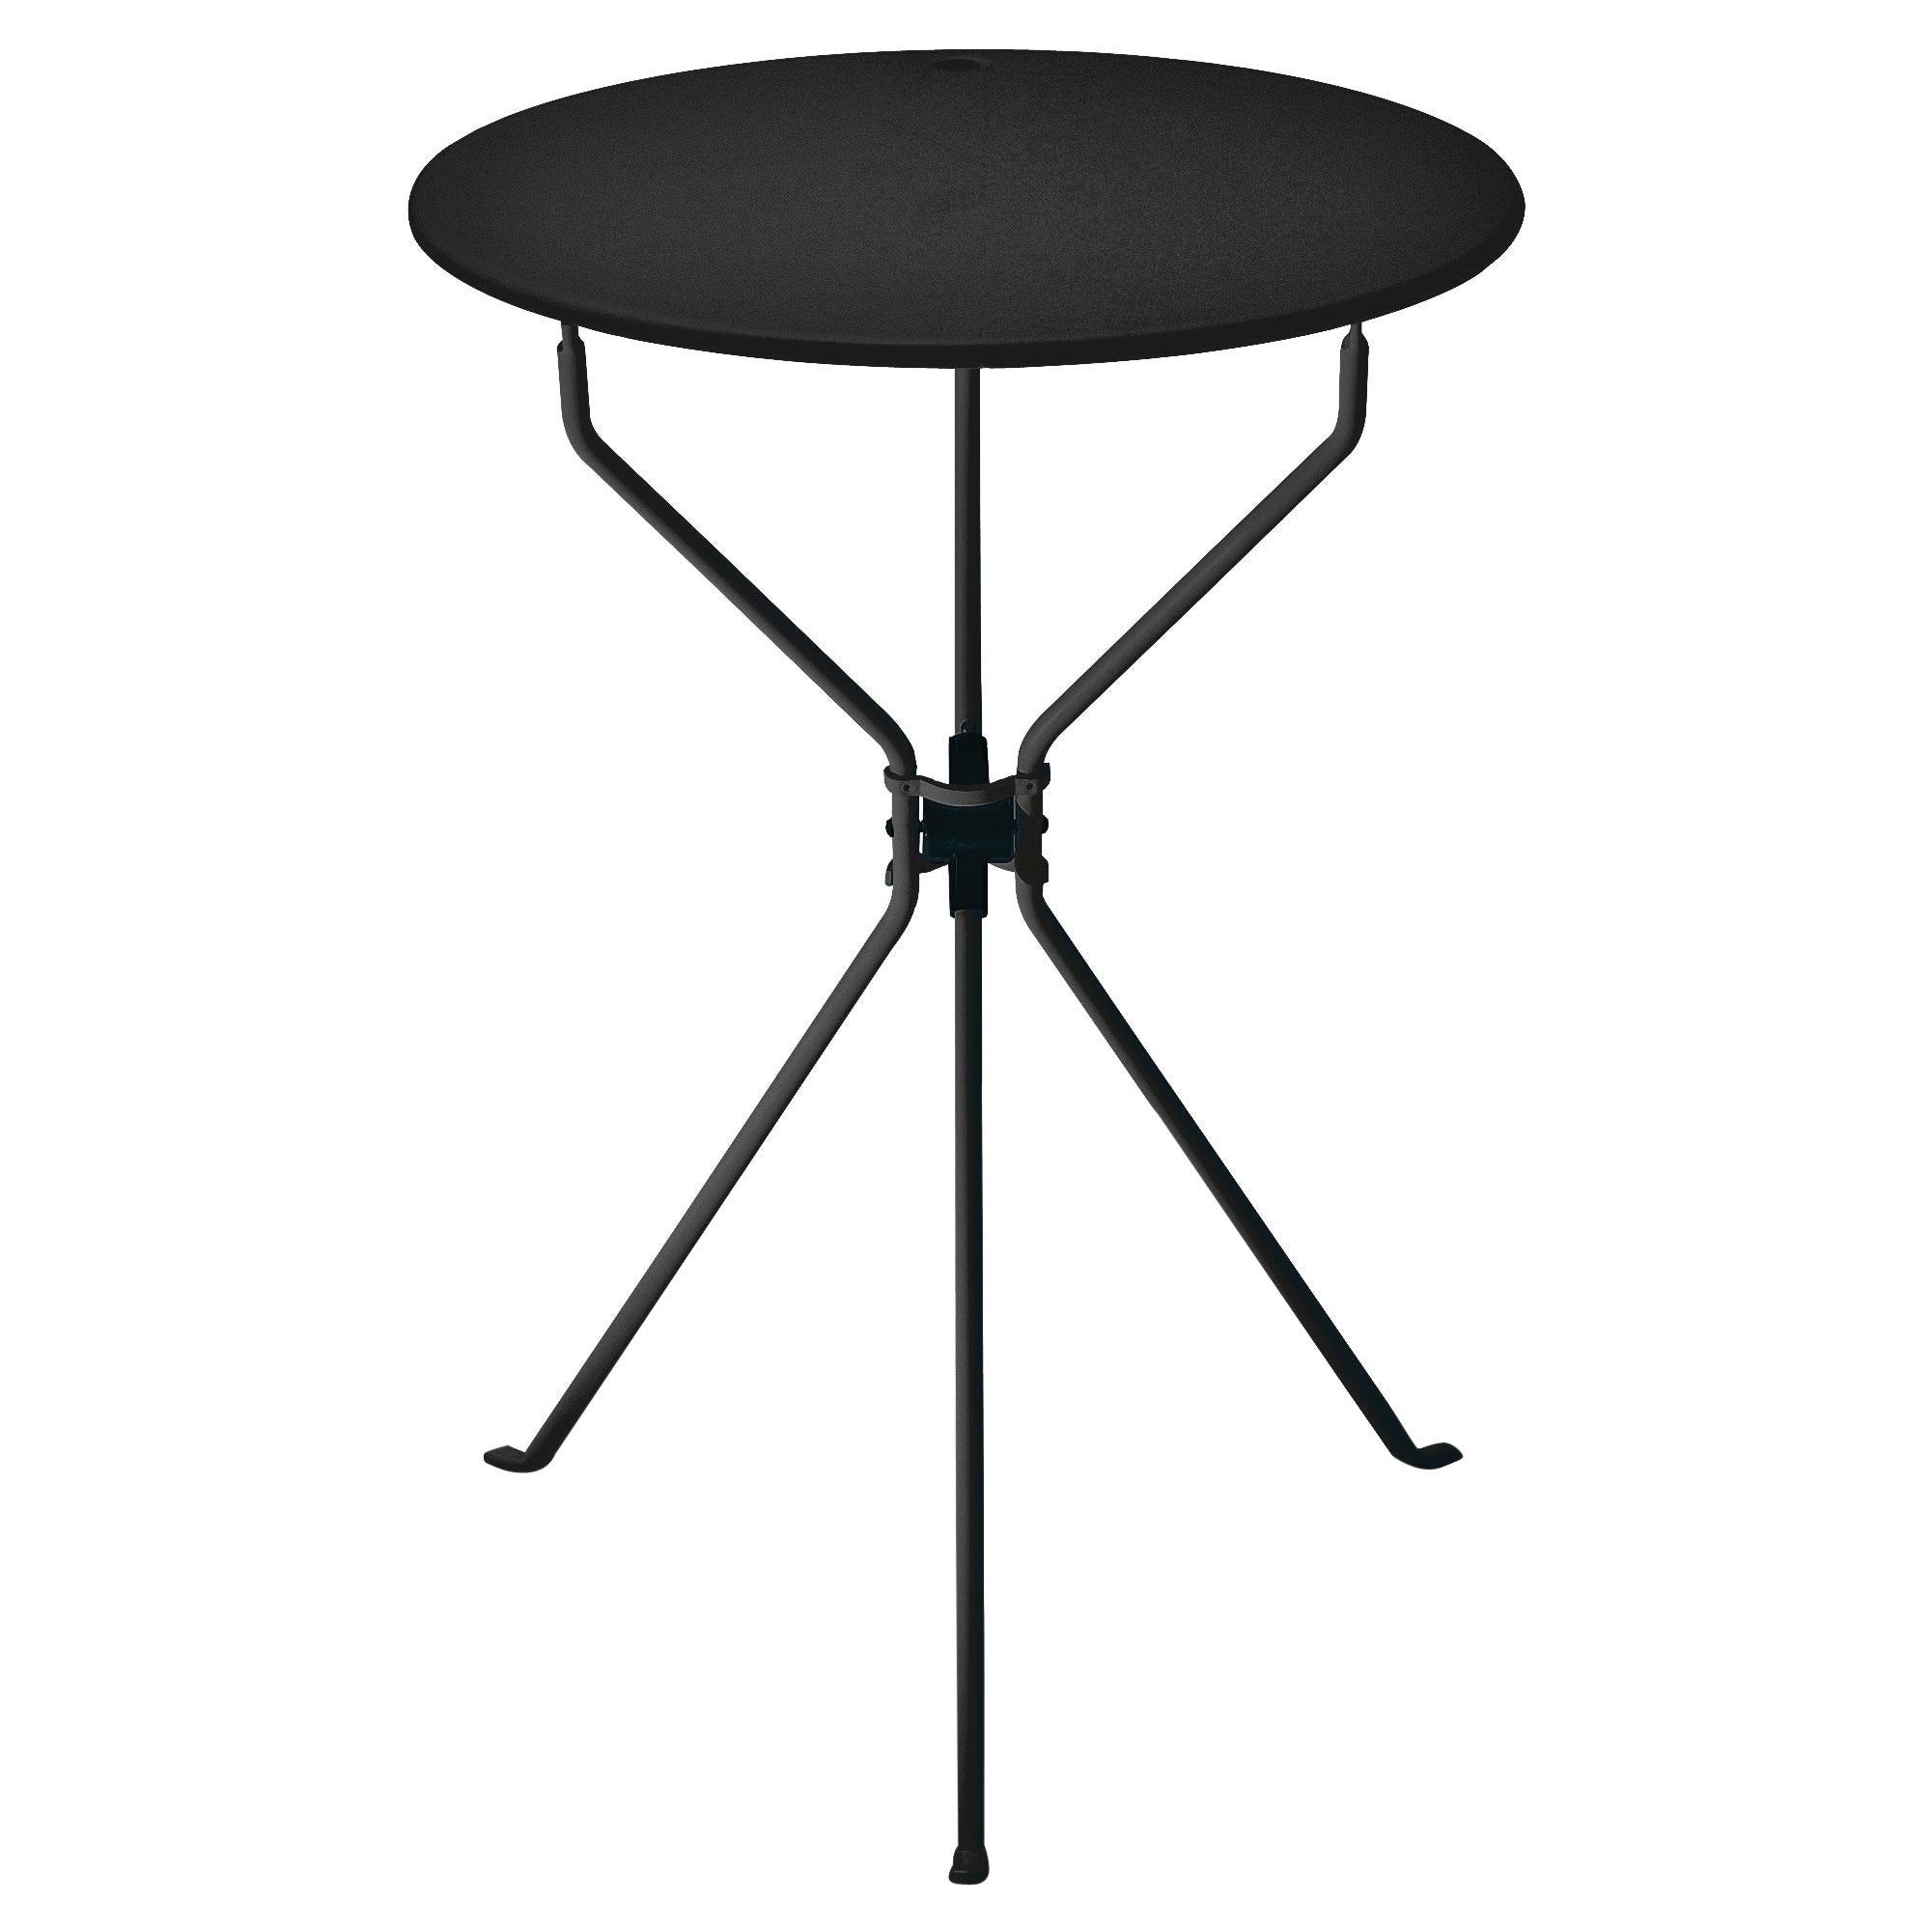 Zanotta Cumano Folding Table in Black Finish with Steel Top